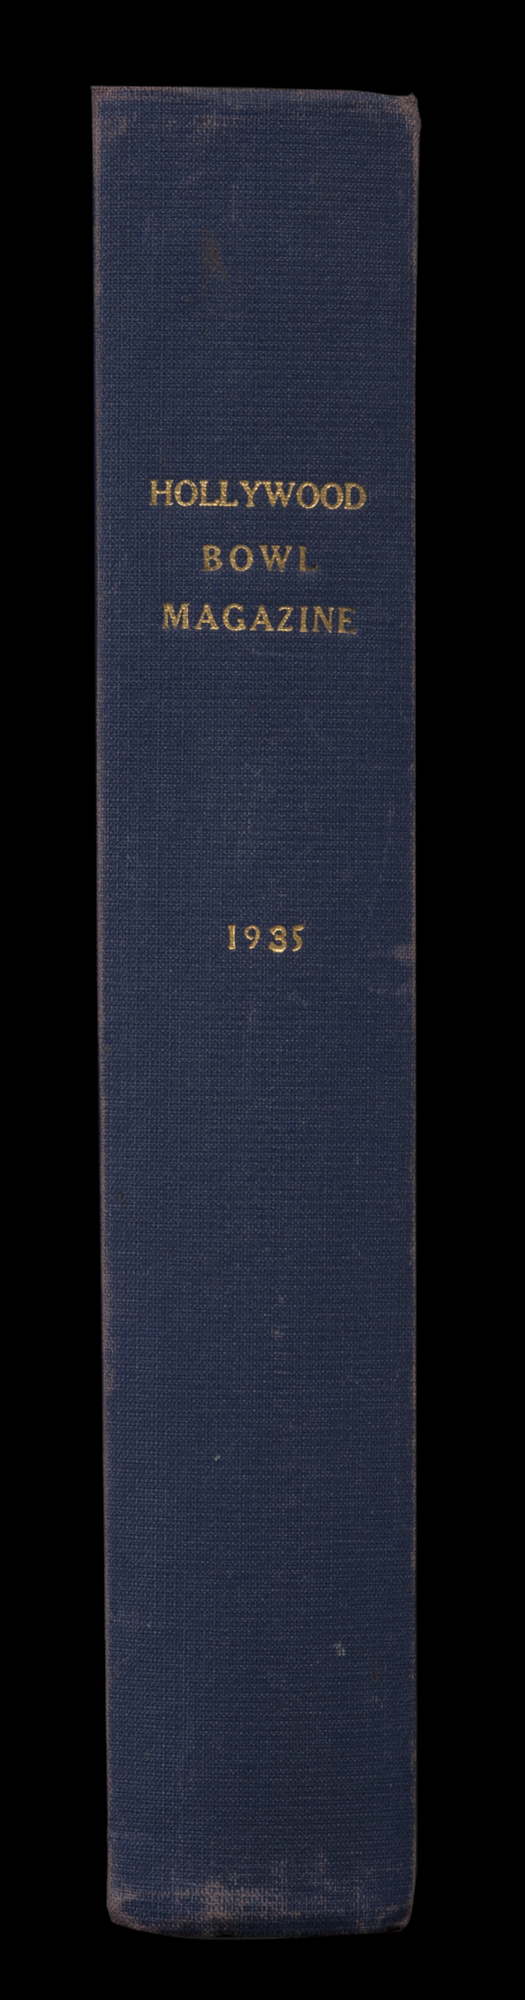 HB_ProgramBook_Spine_1935.jpg